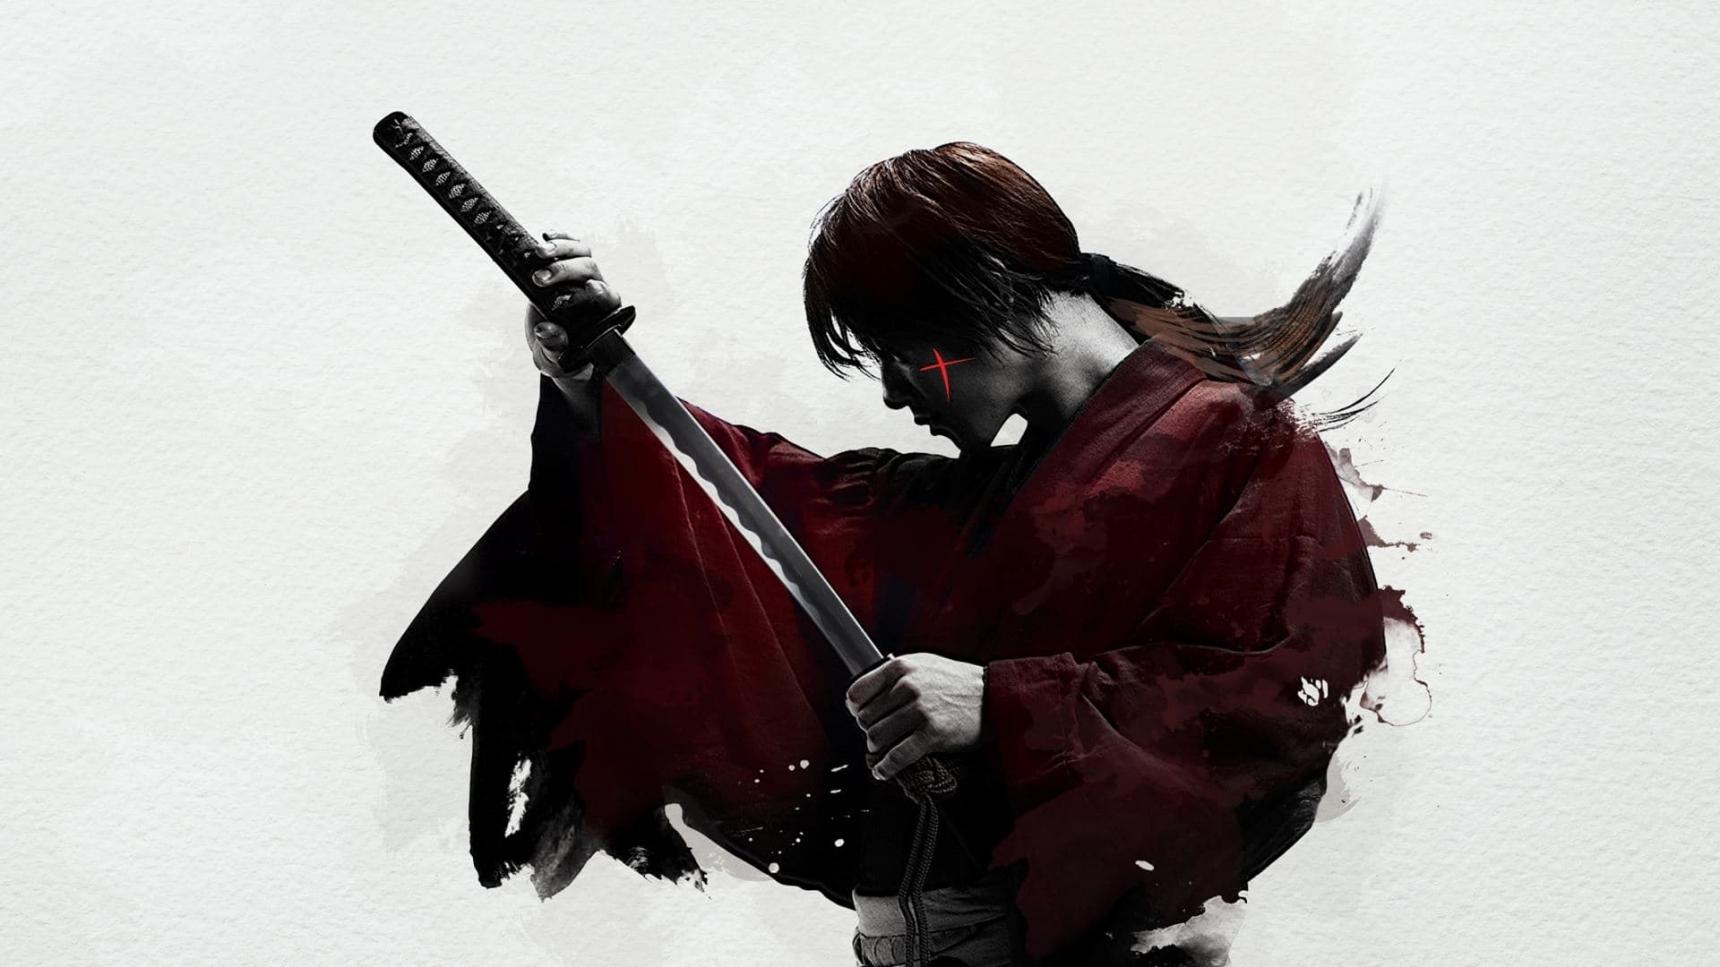 poster de Kenshin, el guerrero samurái